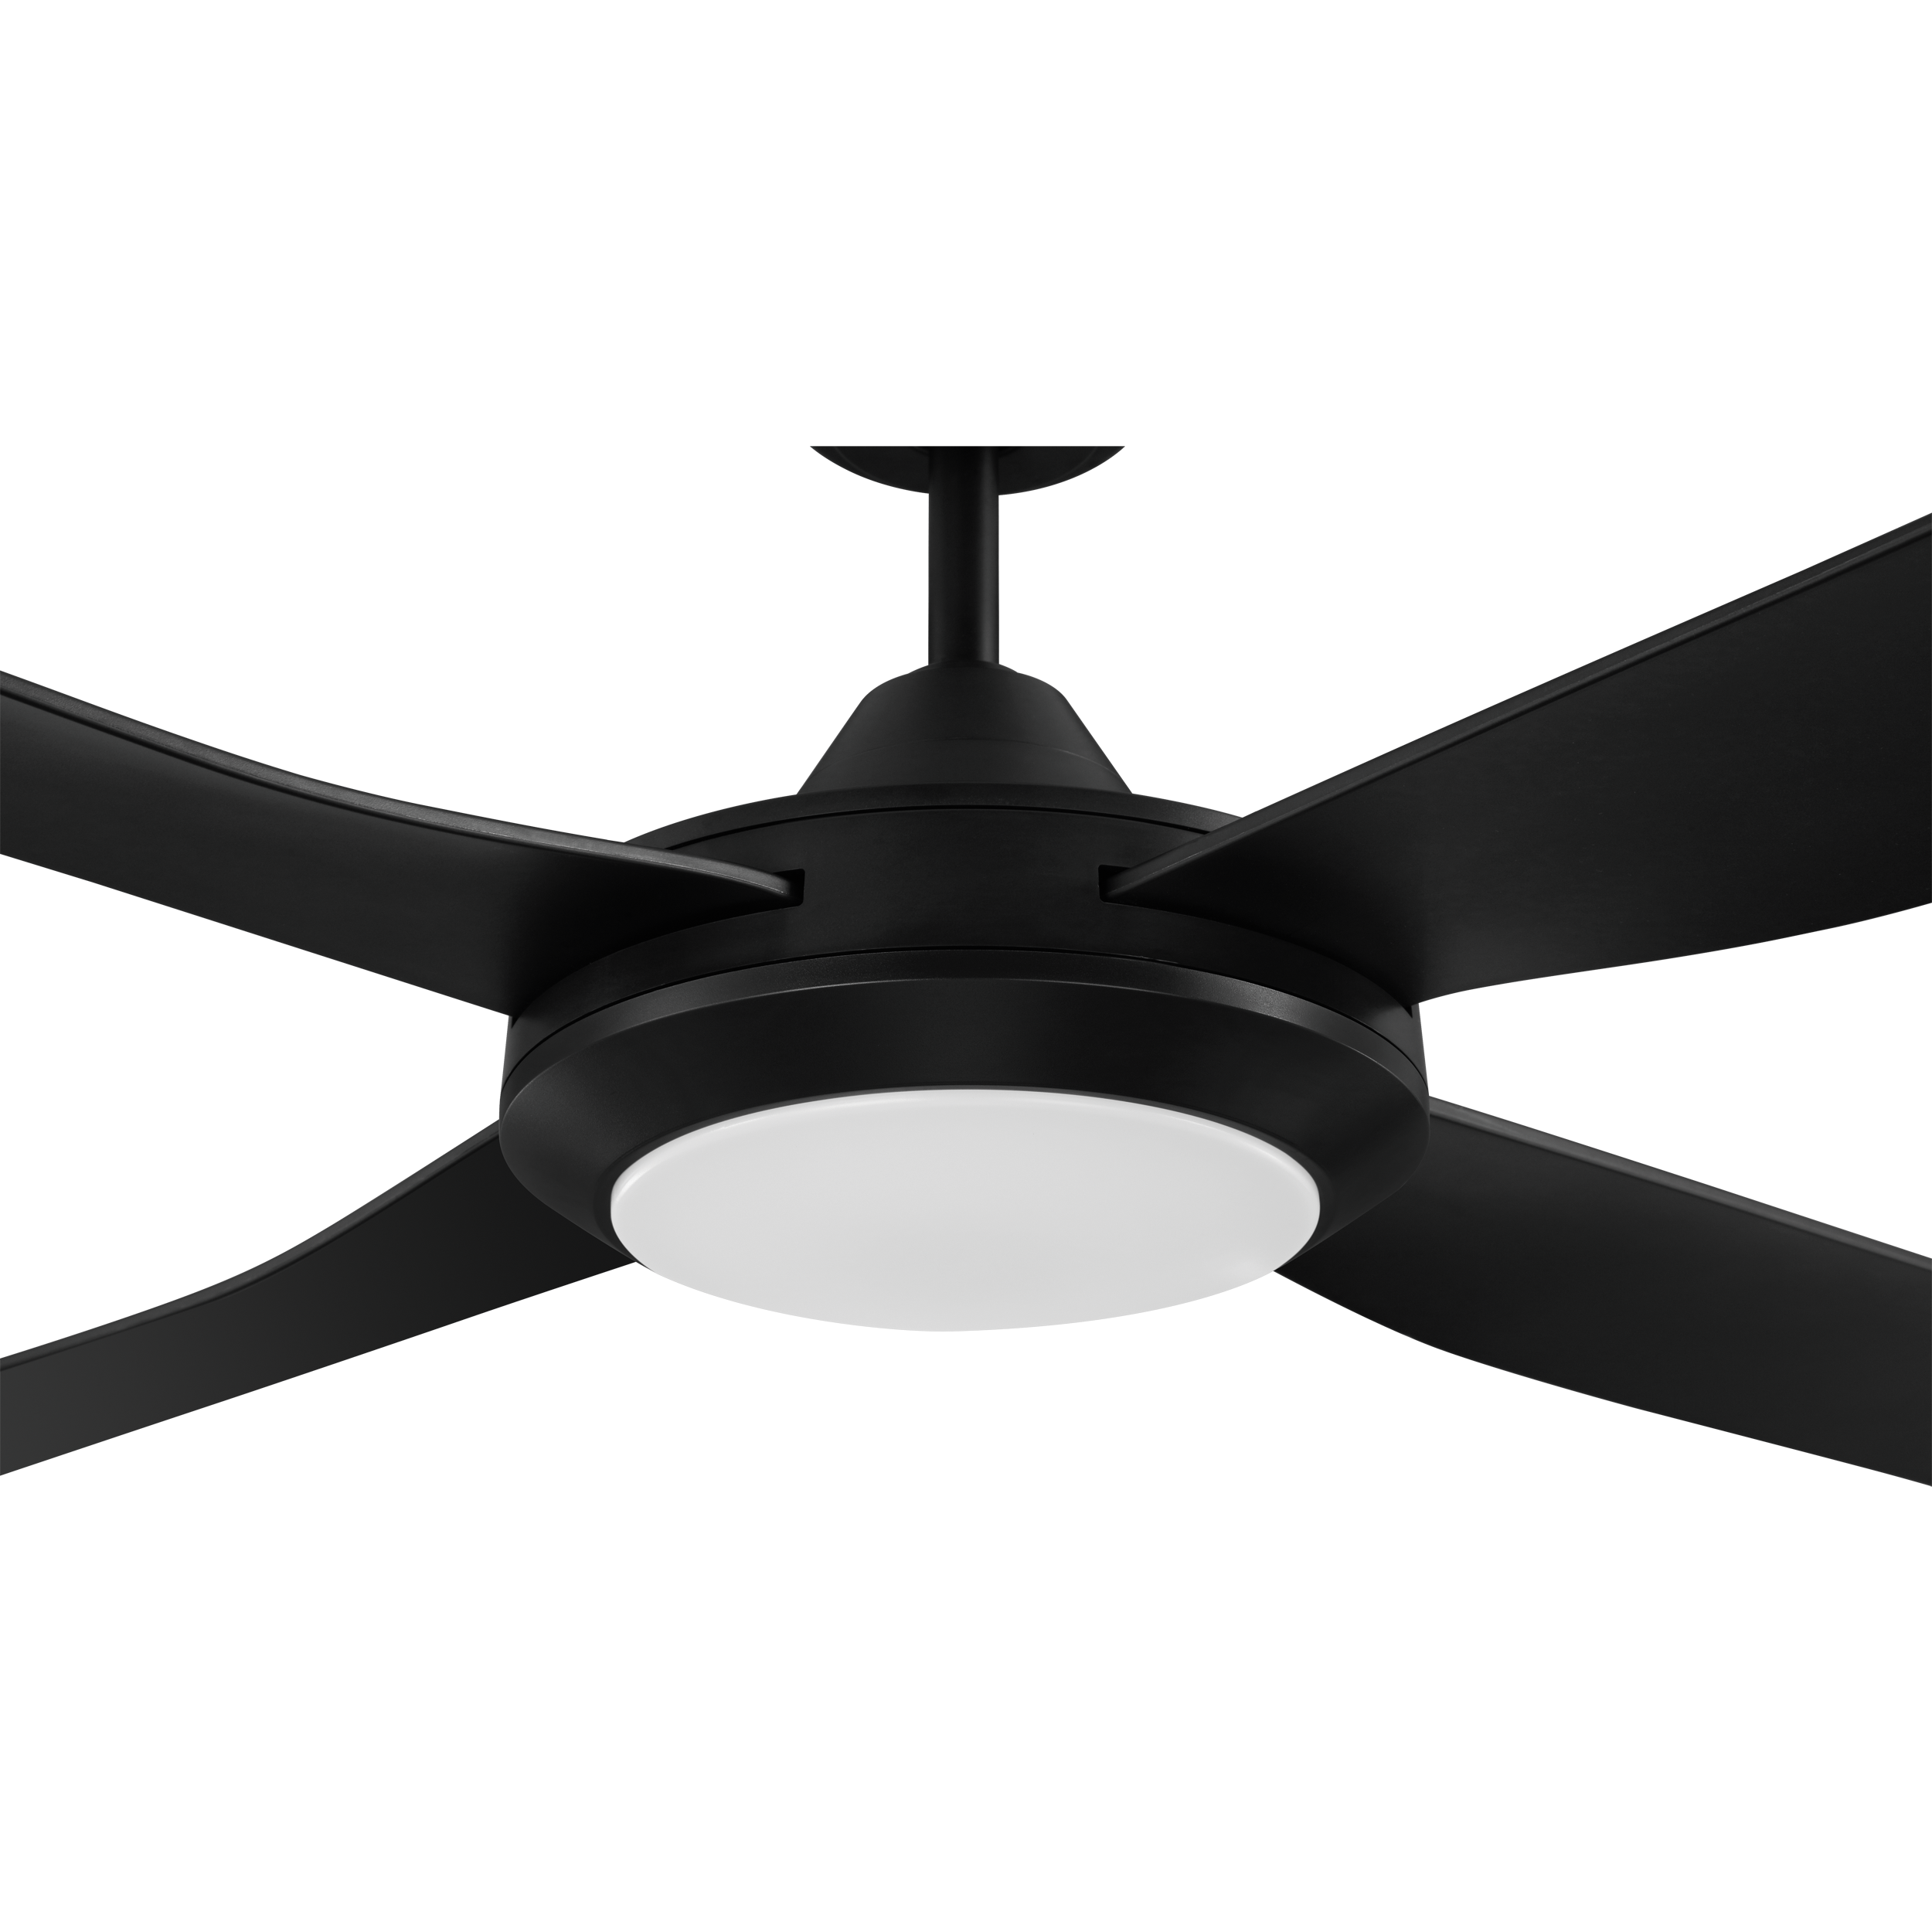 Bondi 52 LED Black ABS Blades 132cm AC Motor Ceiling Fan with Light